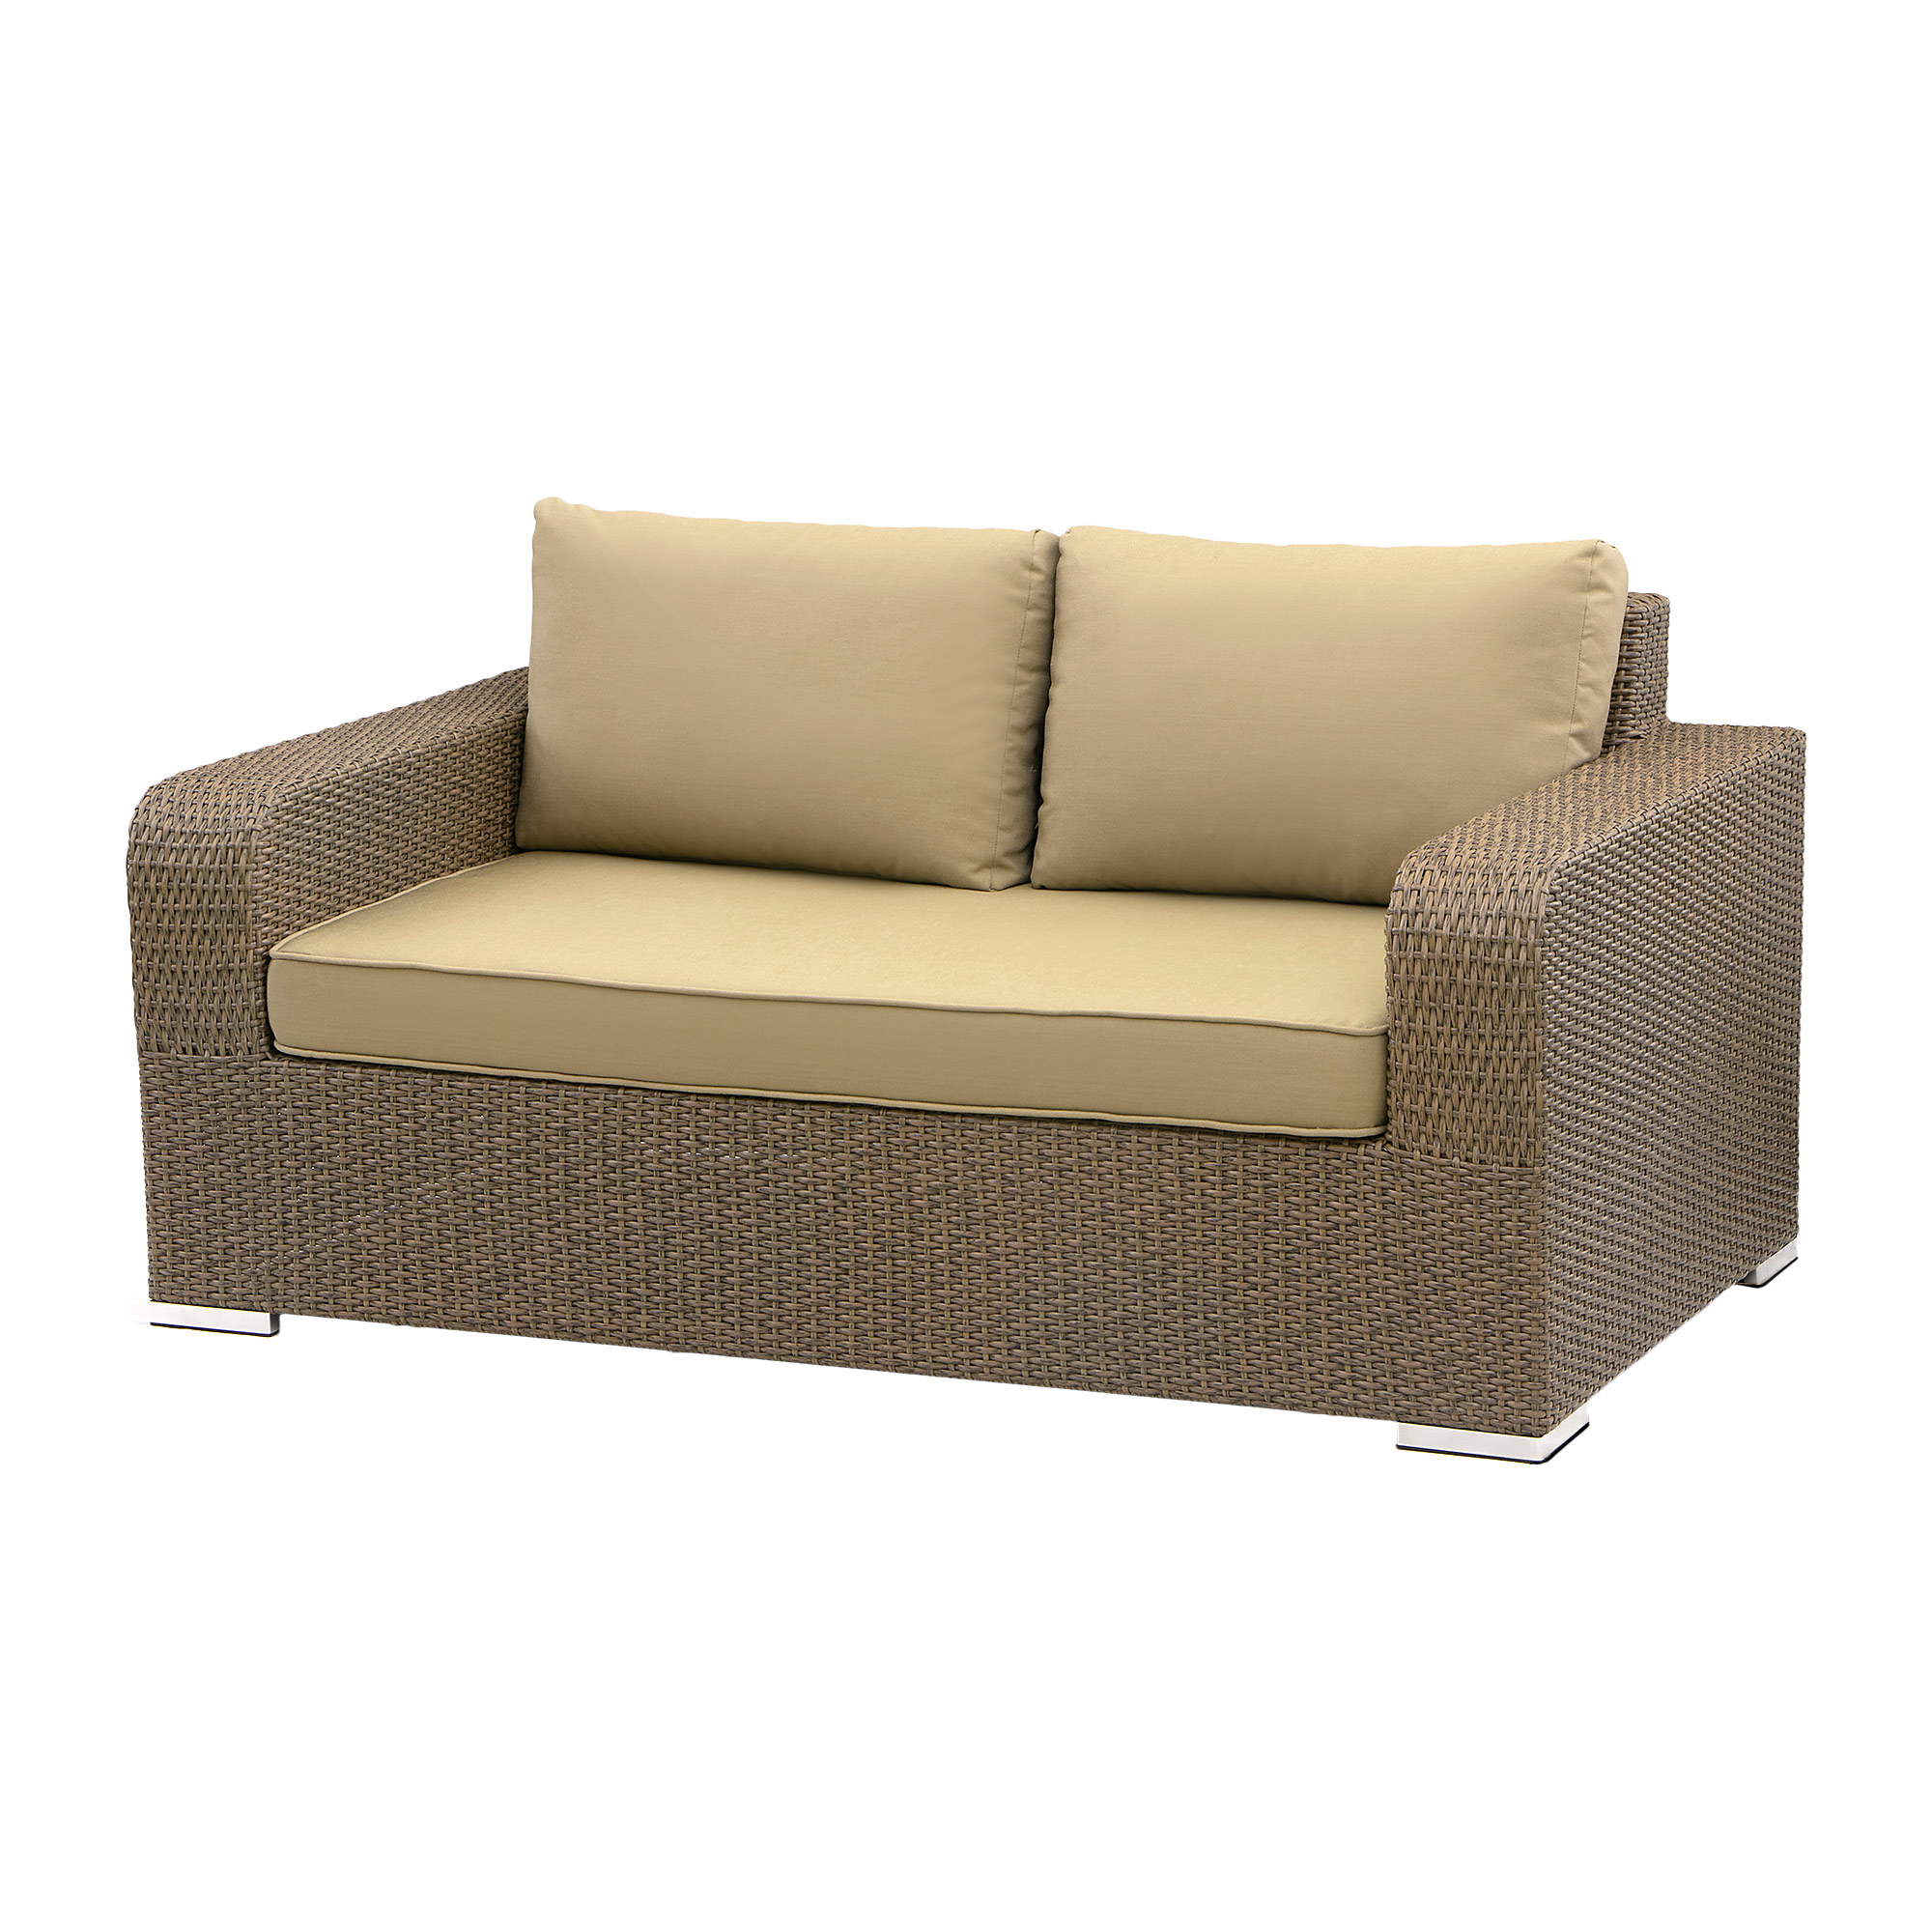 Комплект мебели Mavi Rattan 012 dkst, цвет бежевый, размер диван трехместный 90х224х76 см, диван двухместный 90х159х76 см - фото 3